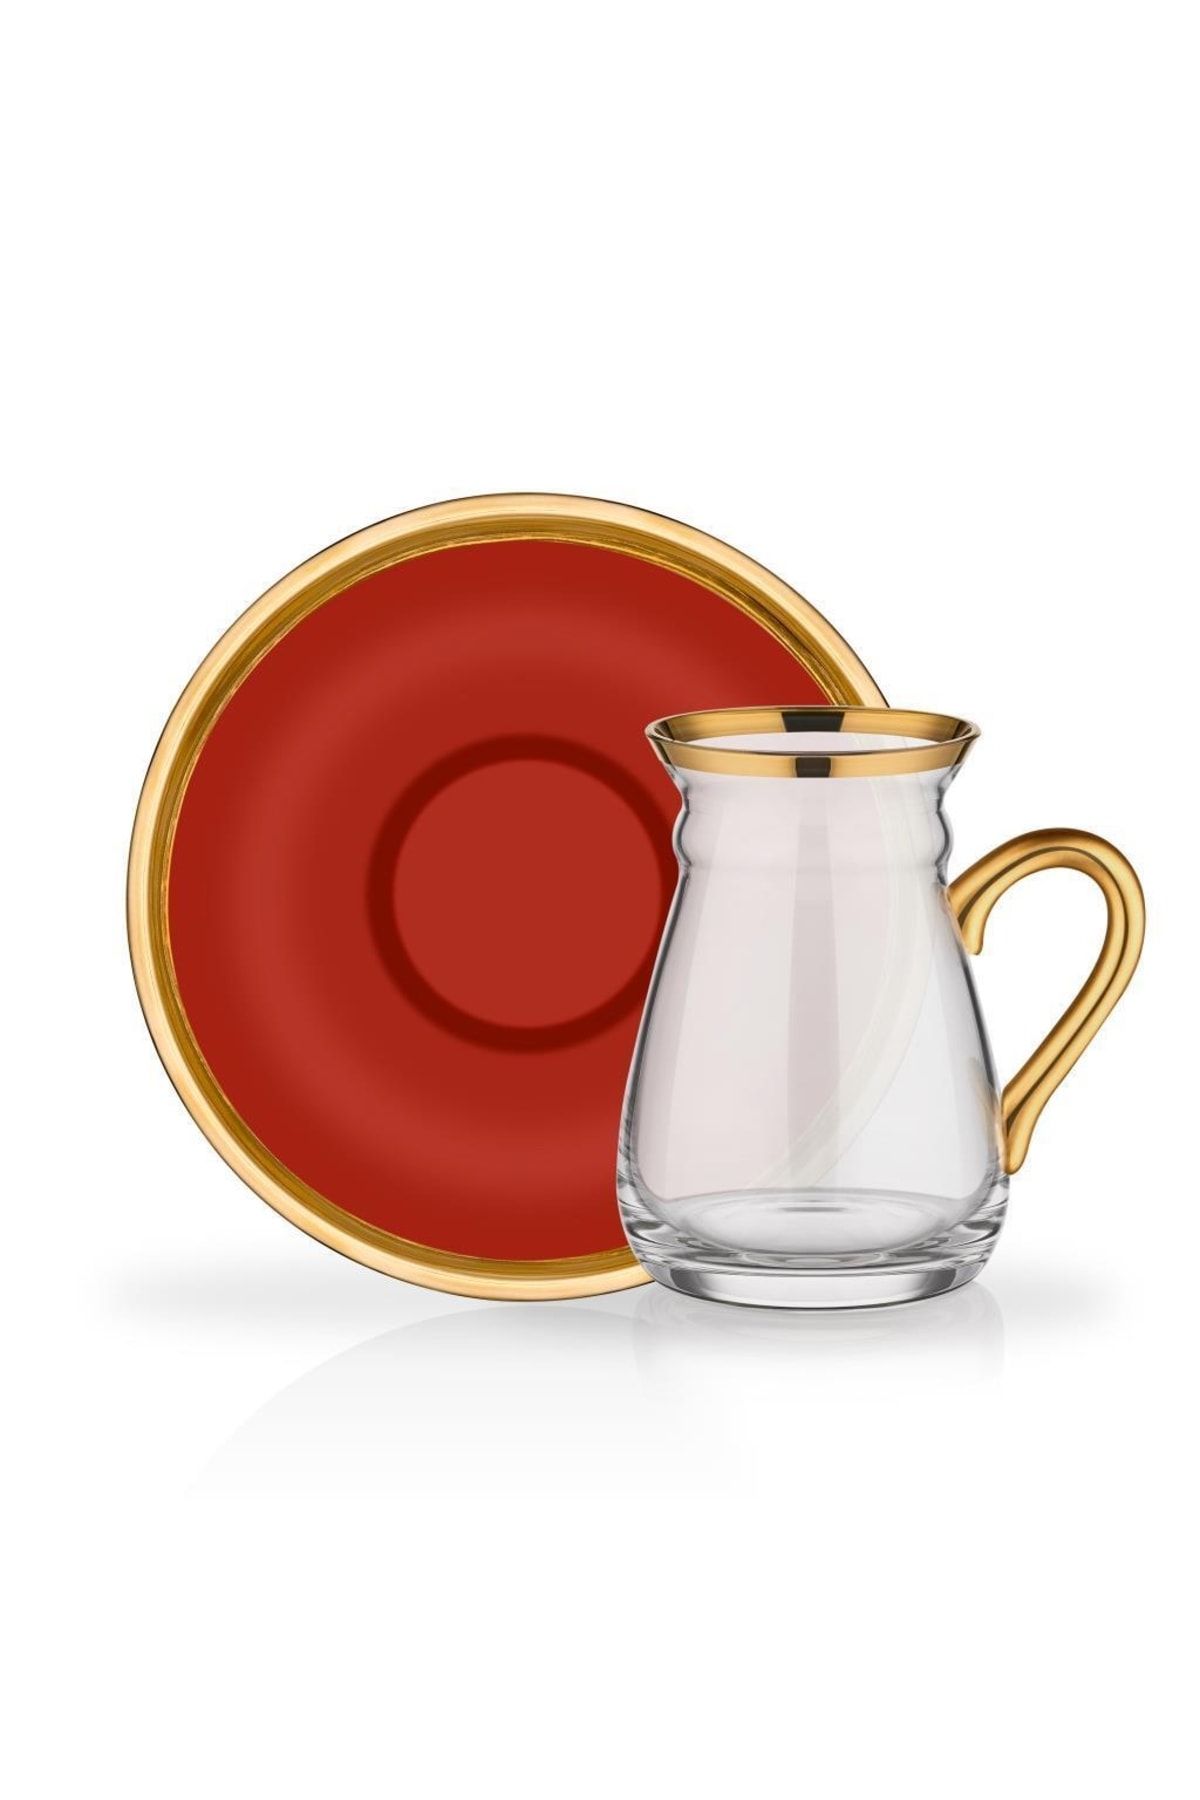 Glore Camıllow Kırmızı Kulplu Çay Seti